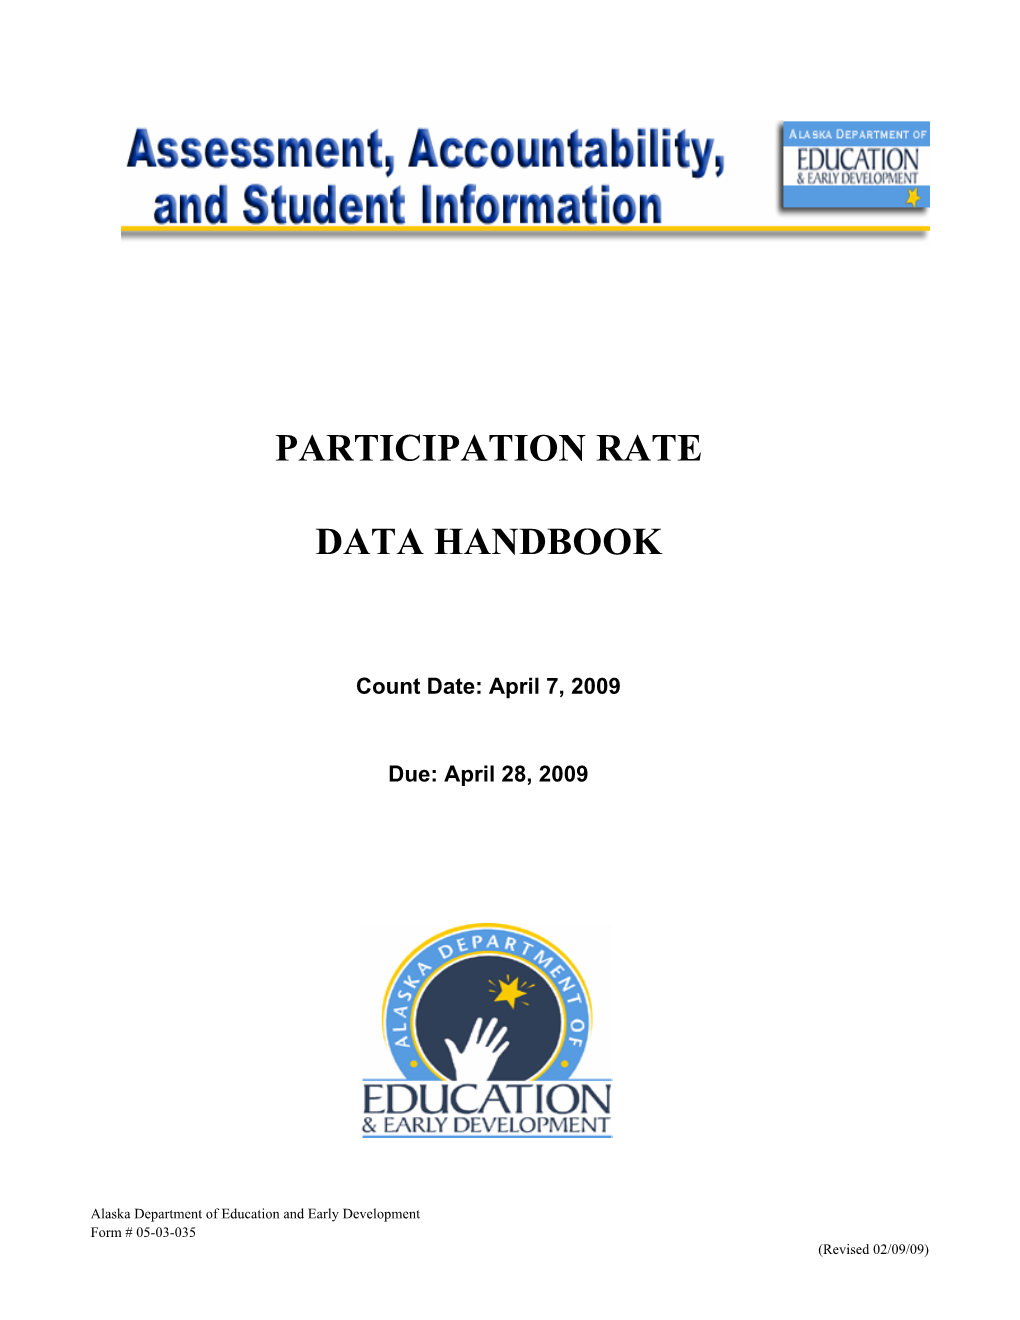 Participation Rate Data Handbook